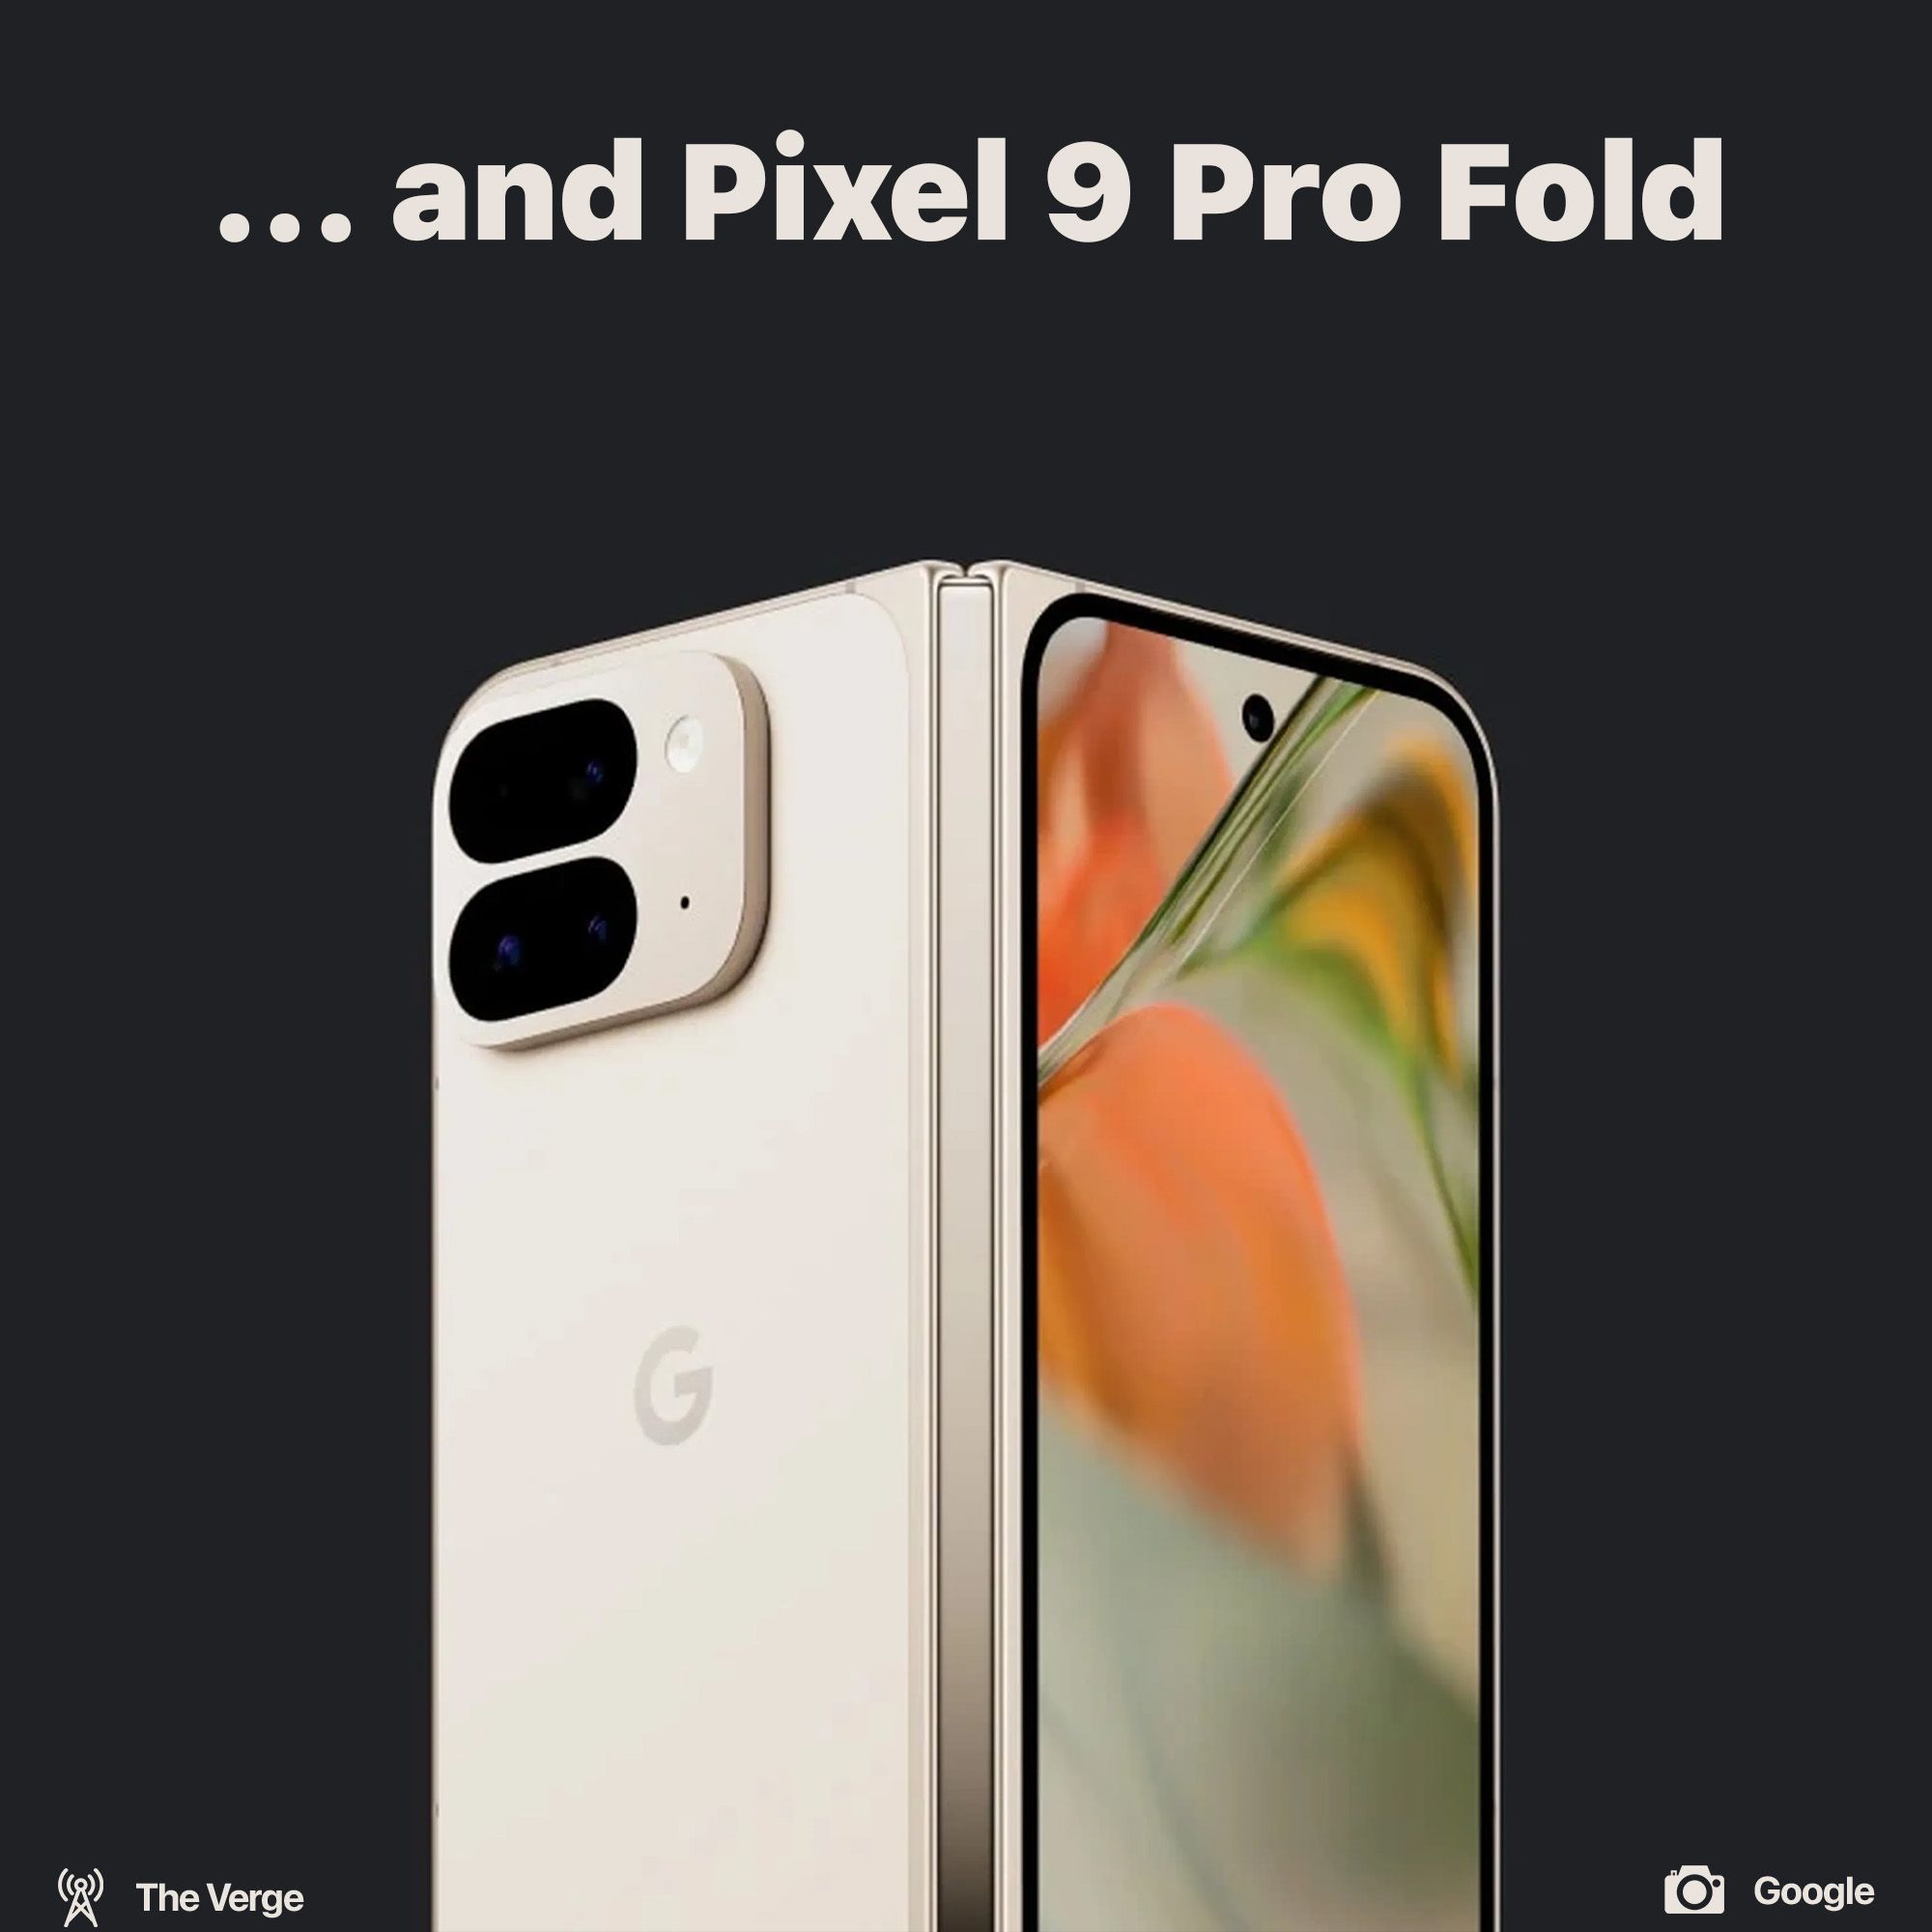 Google teases Pixel Pro 9 Fold